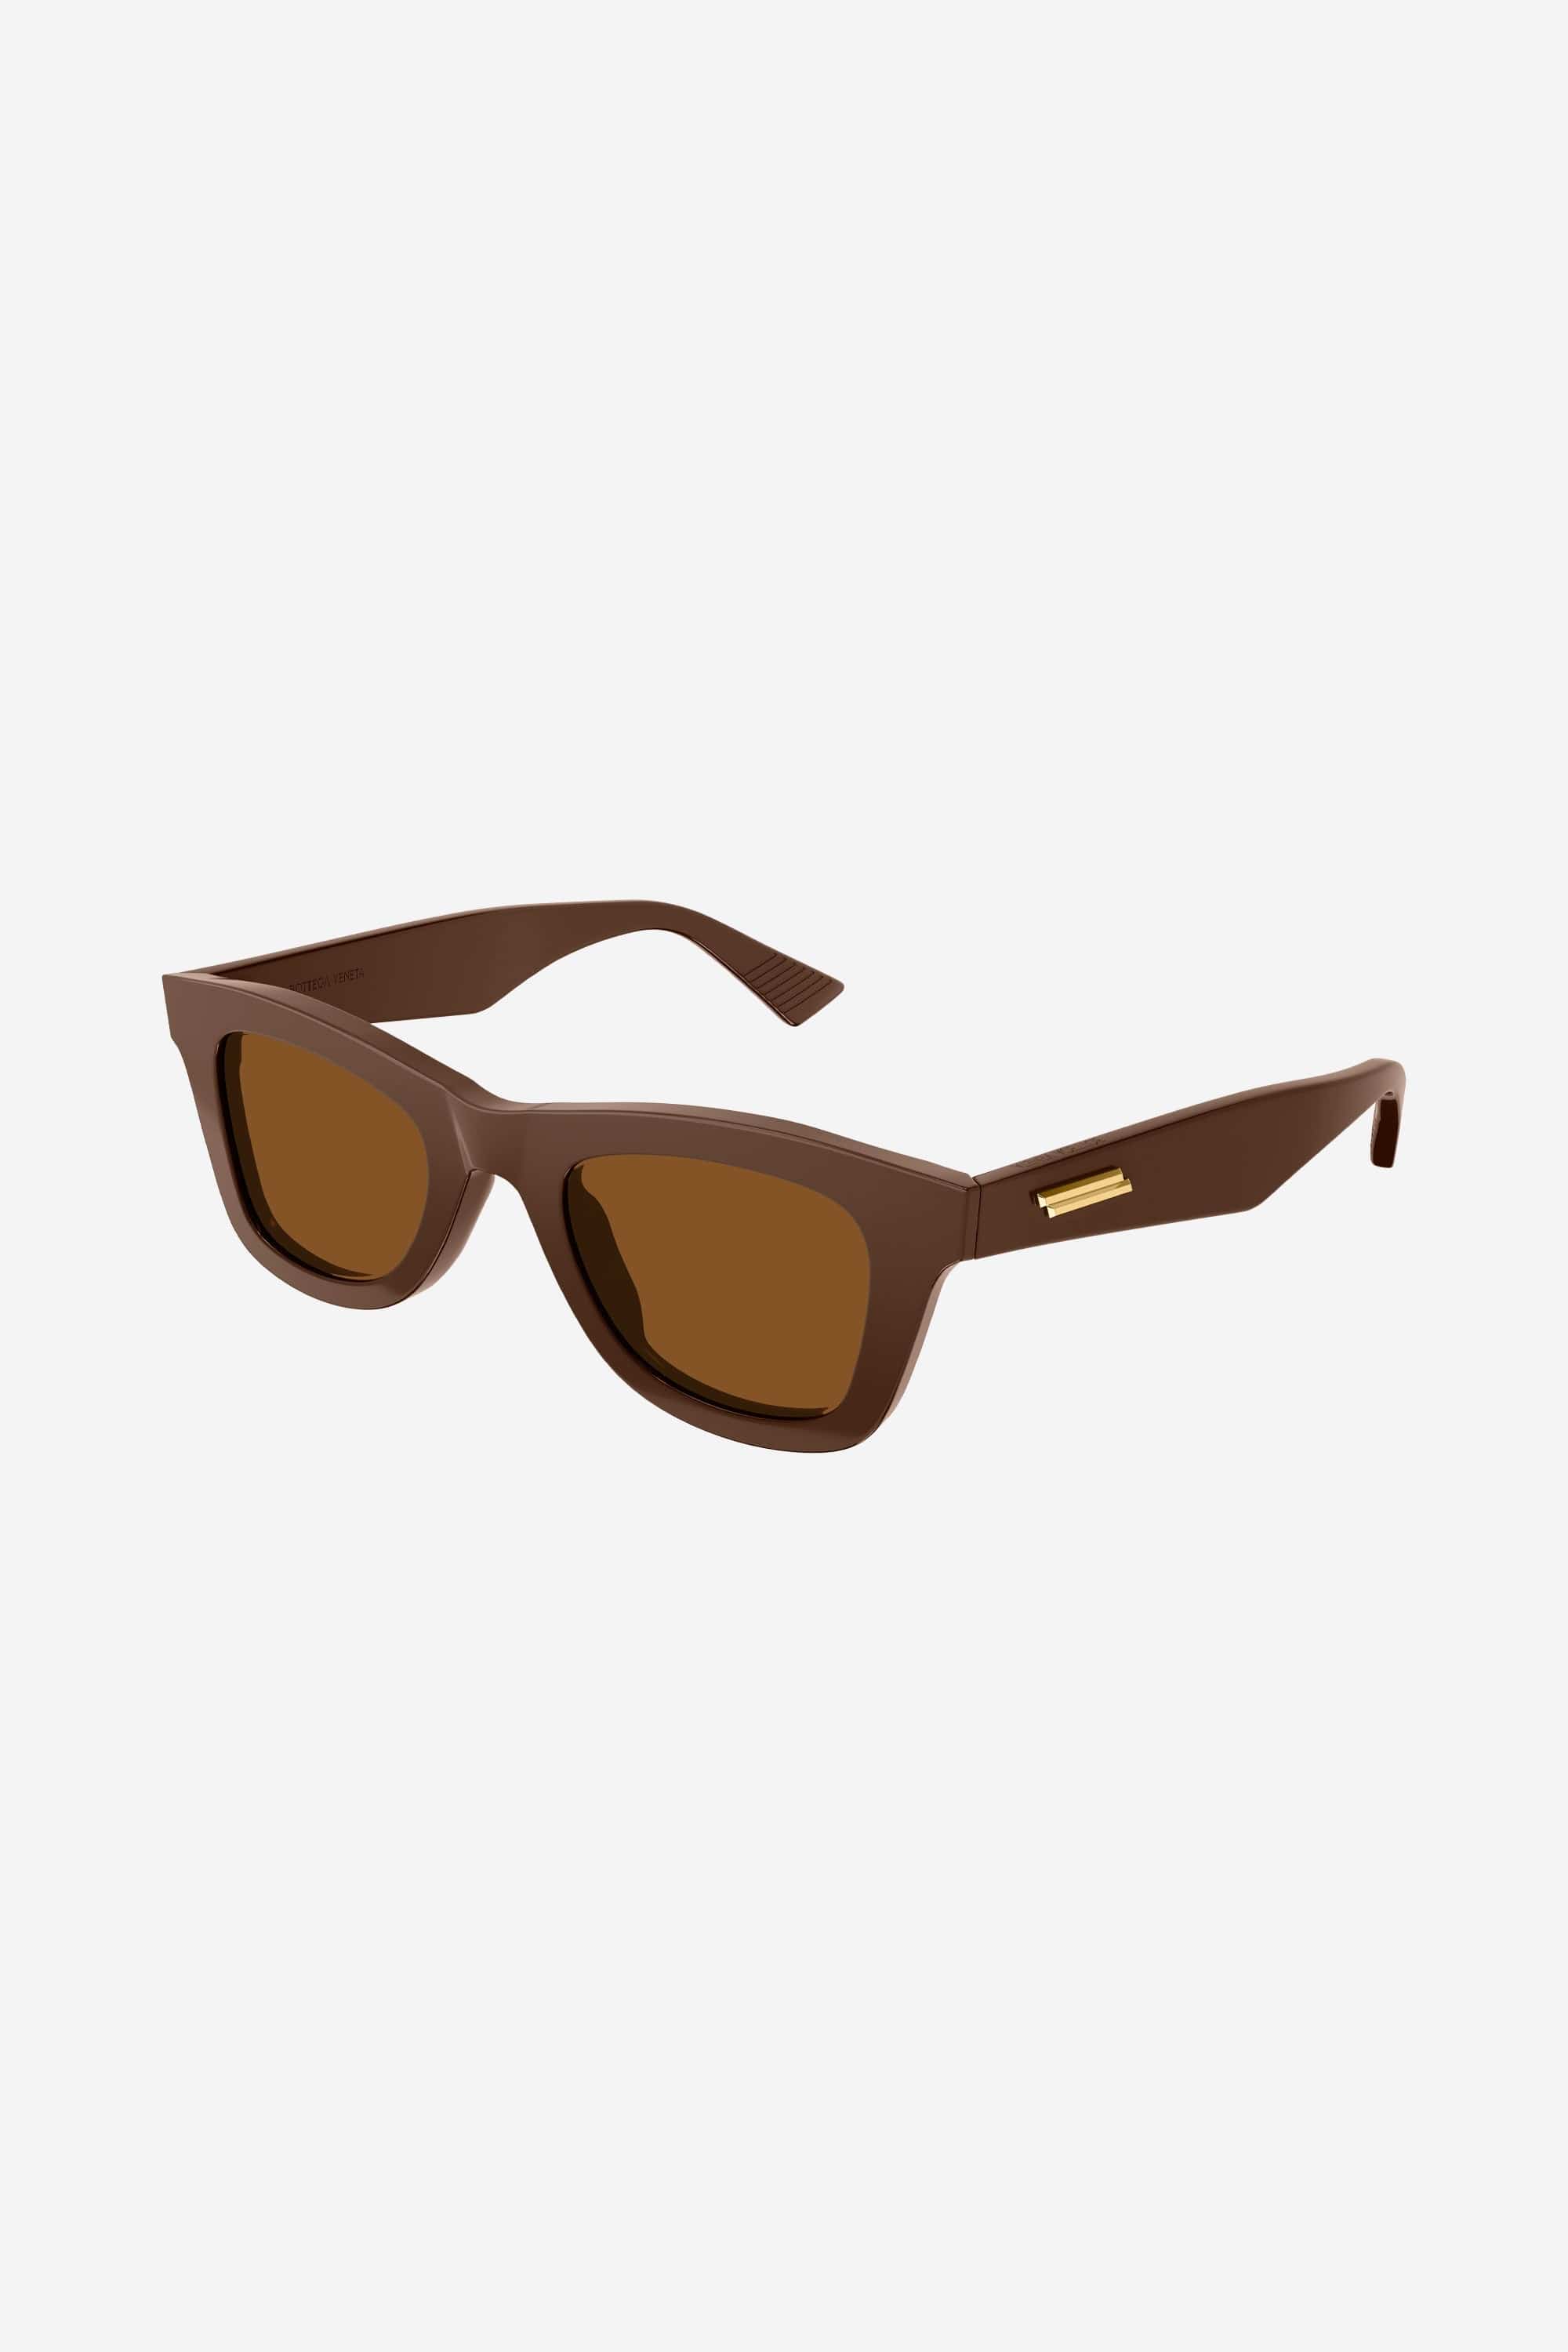 Bottega Veneta geometrical sunglasses - Eyewear Club